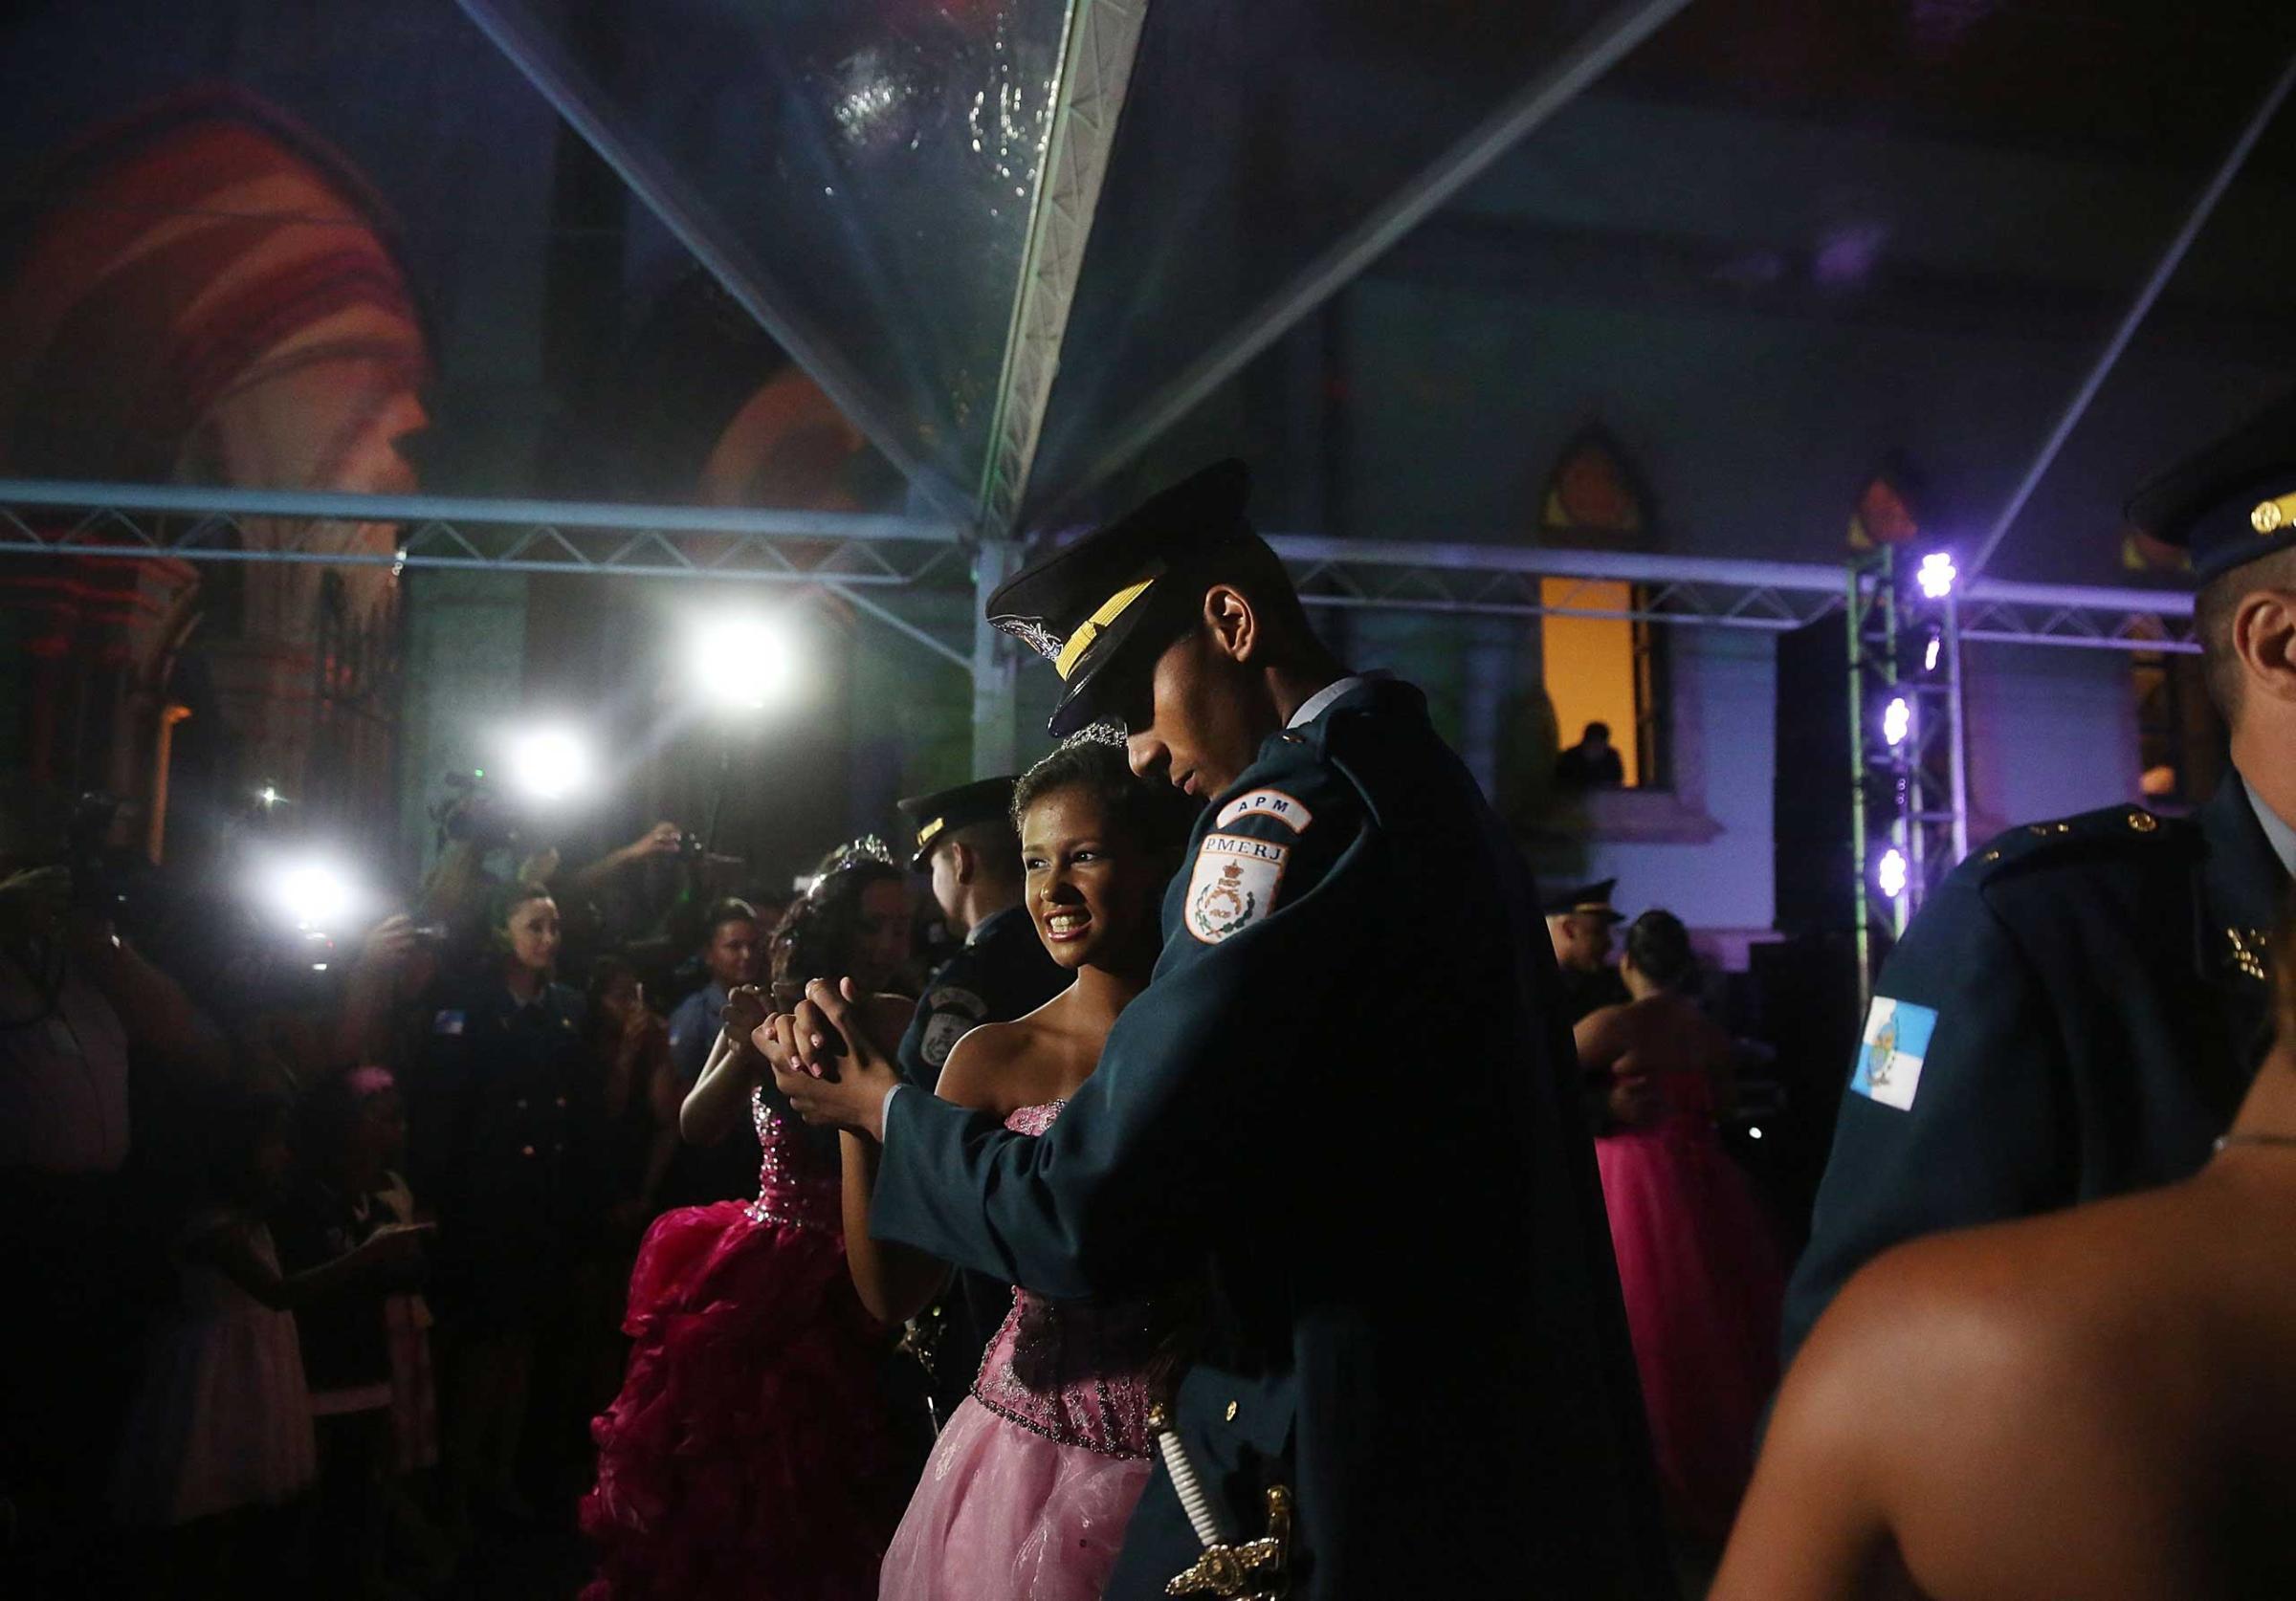 Debutante Ball Held For Rio's Favela Youth